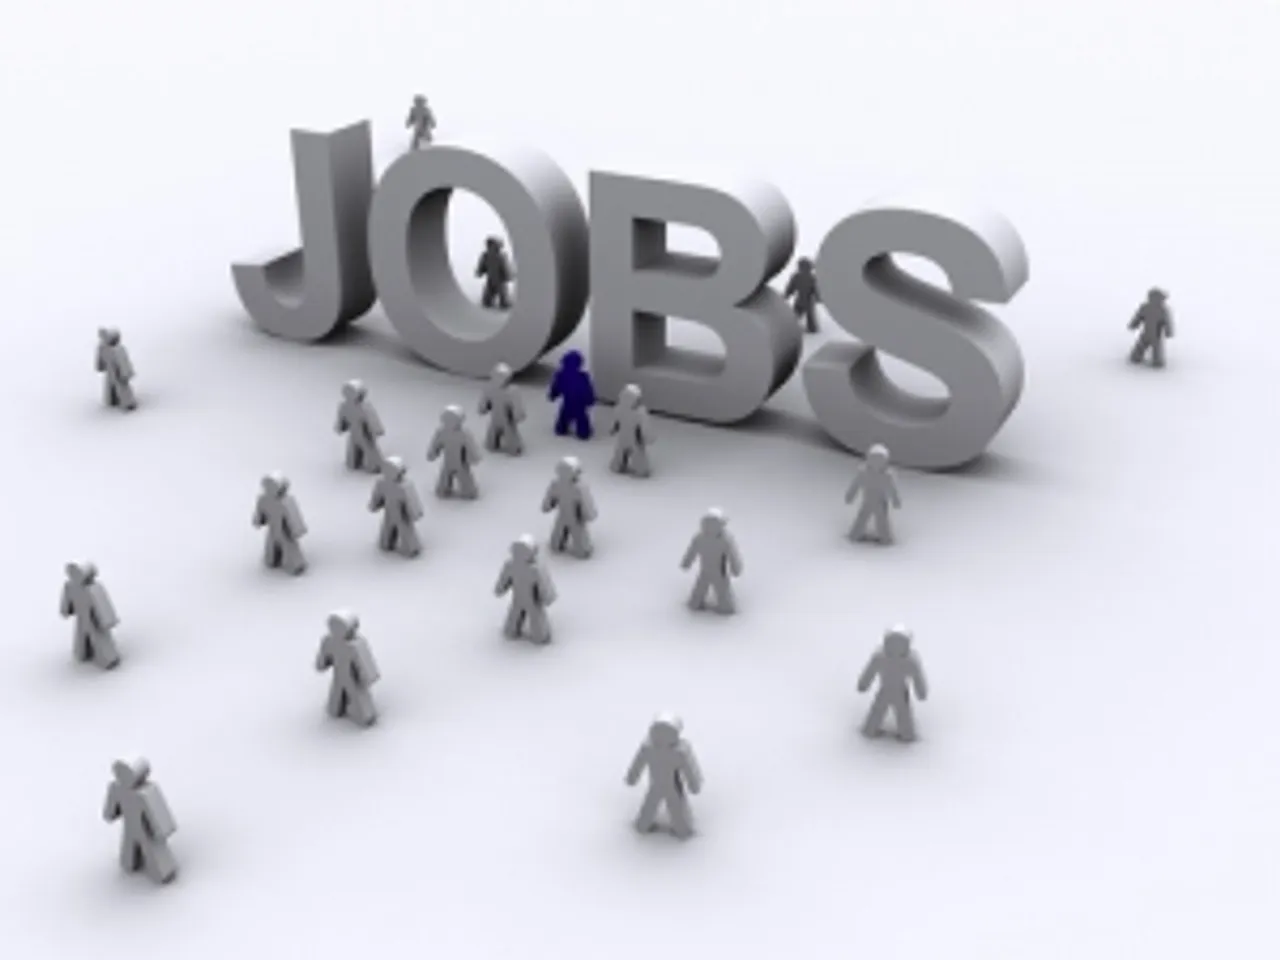 High Salary No Longer Prime Factor For Job Search: Naukri Survey